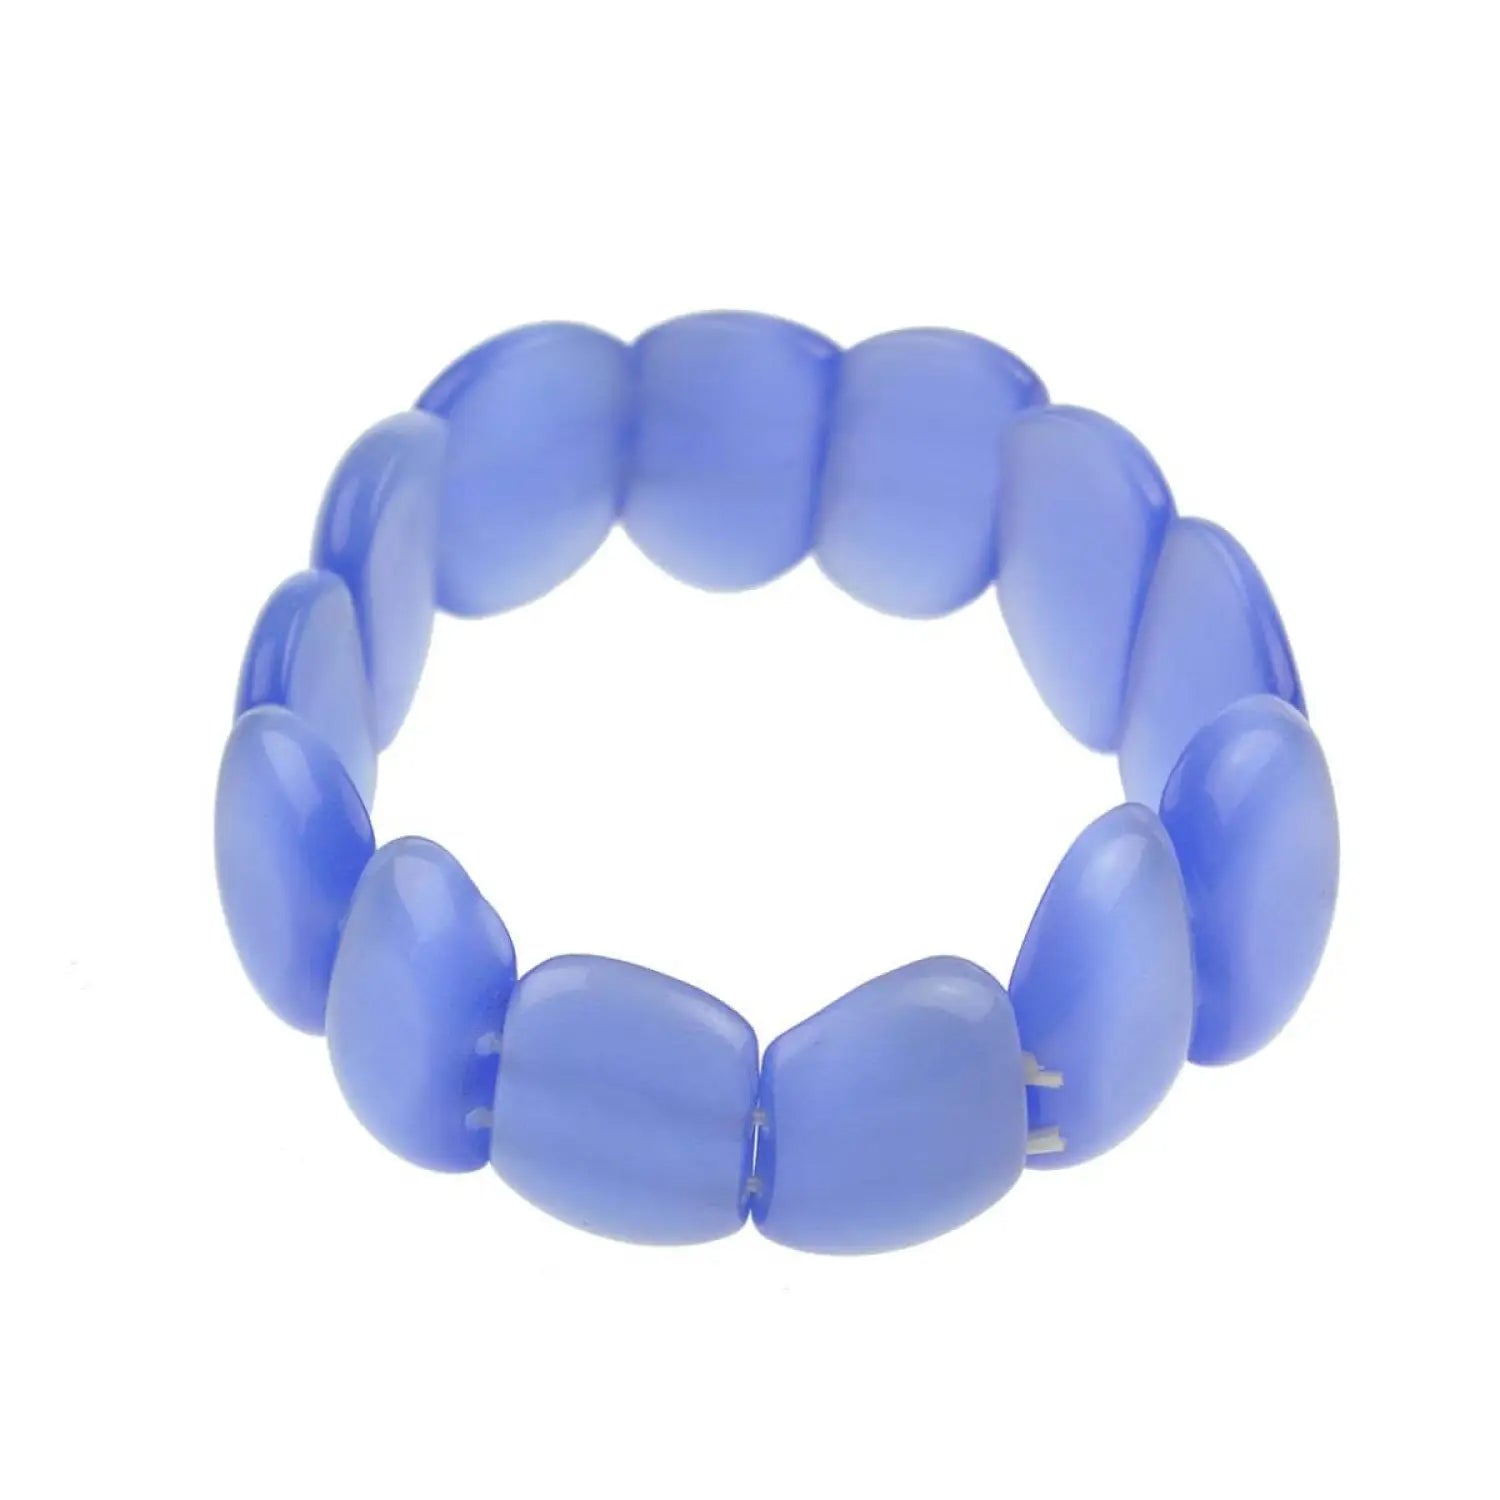 Blue round pastel plastic bead bracelet from Tri-set - Versatile accessory.